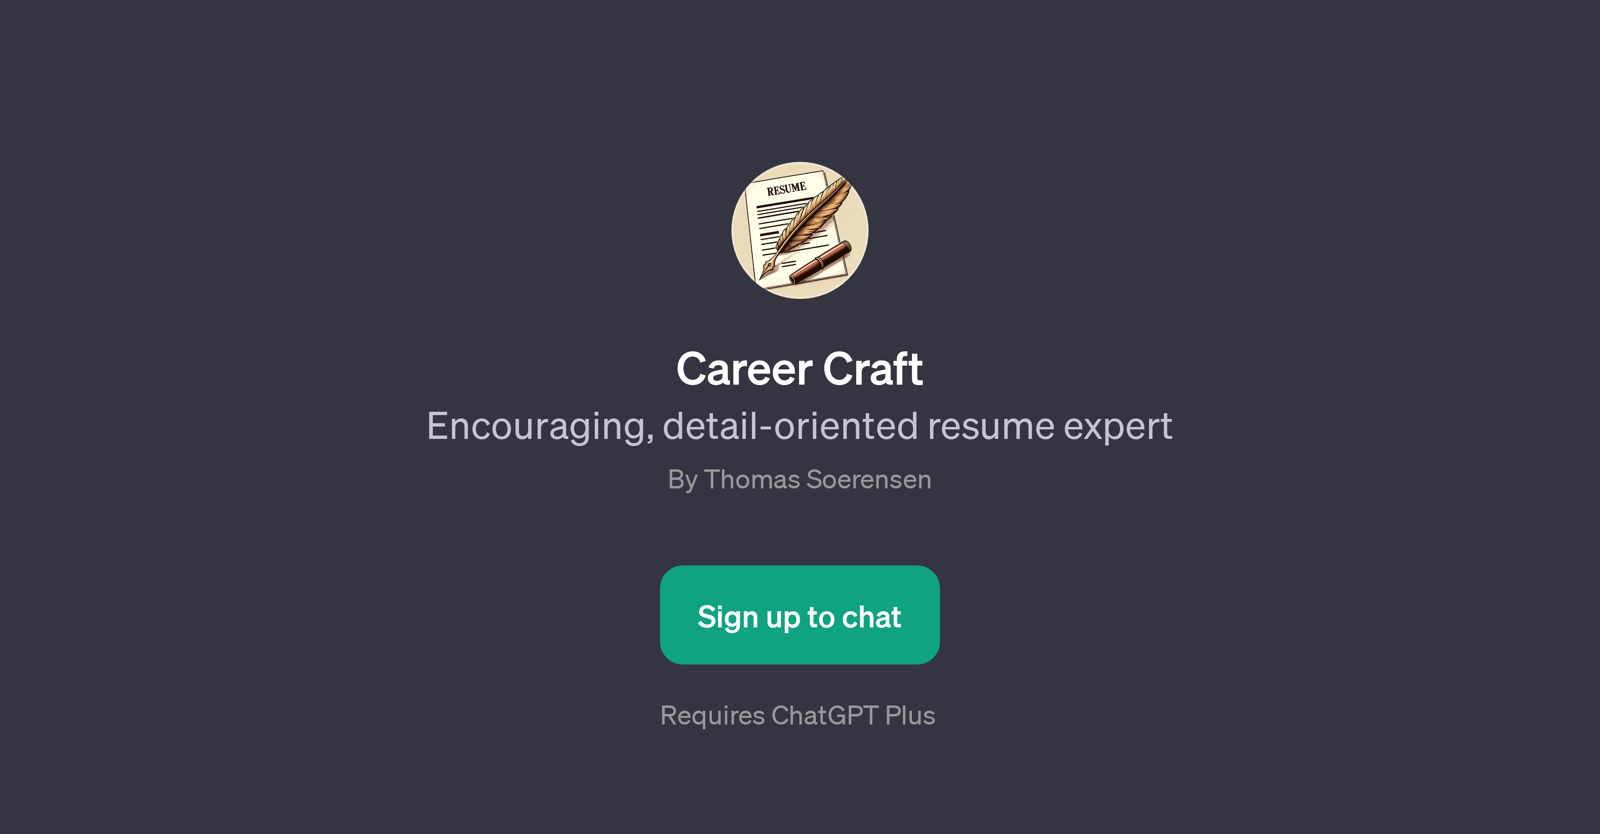 Career Craft website